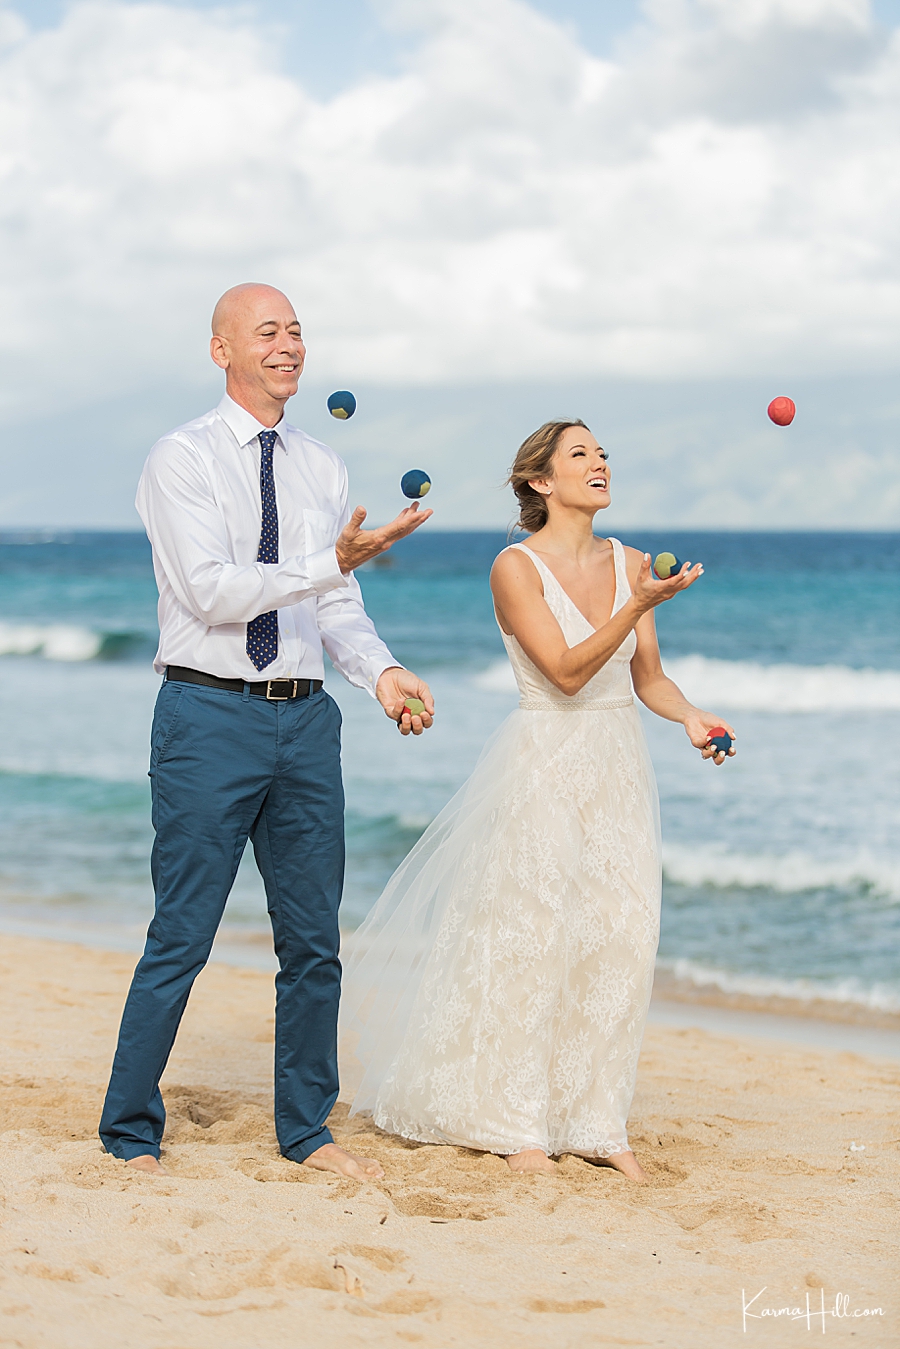 fun bride and groom beach pose ideas